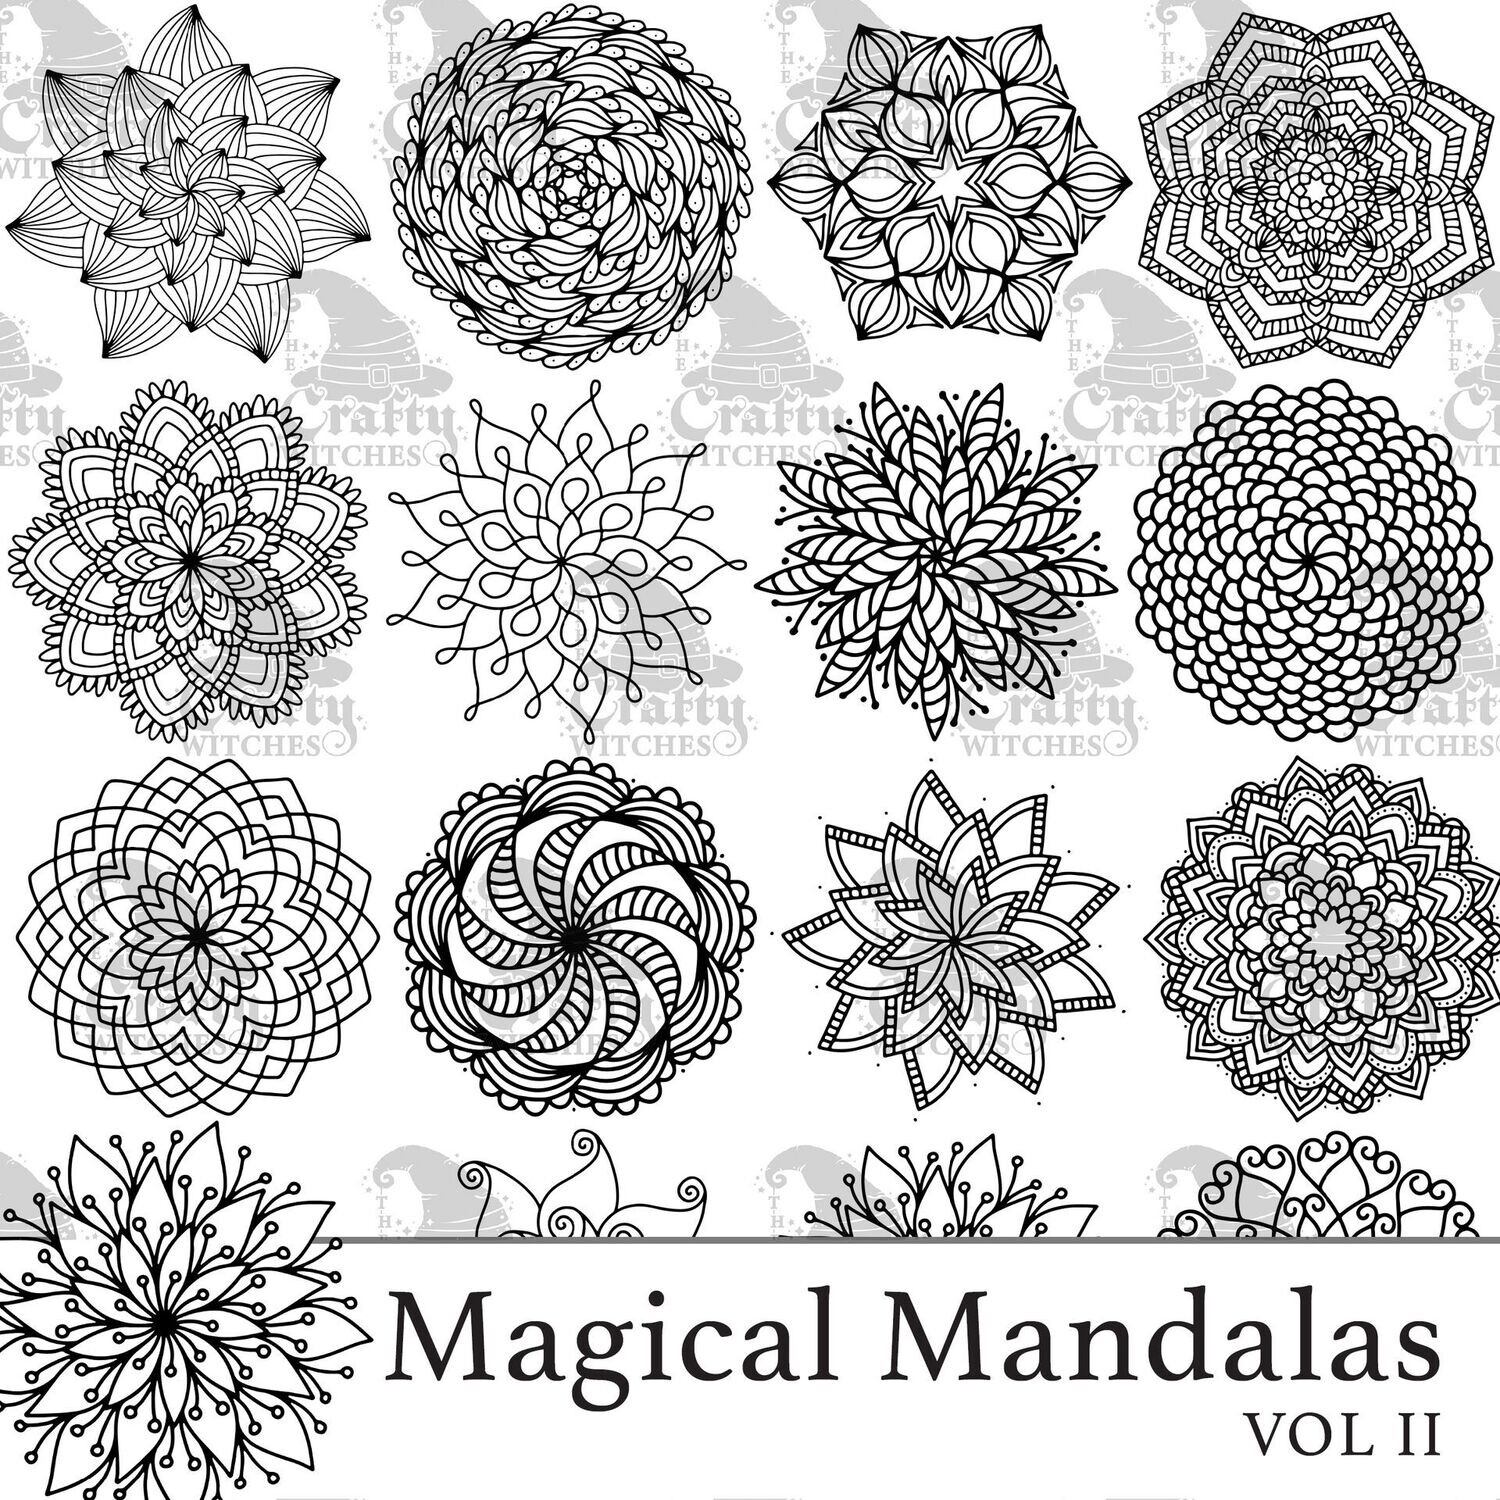 Magical Mandalas Vol II Digital Kit